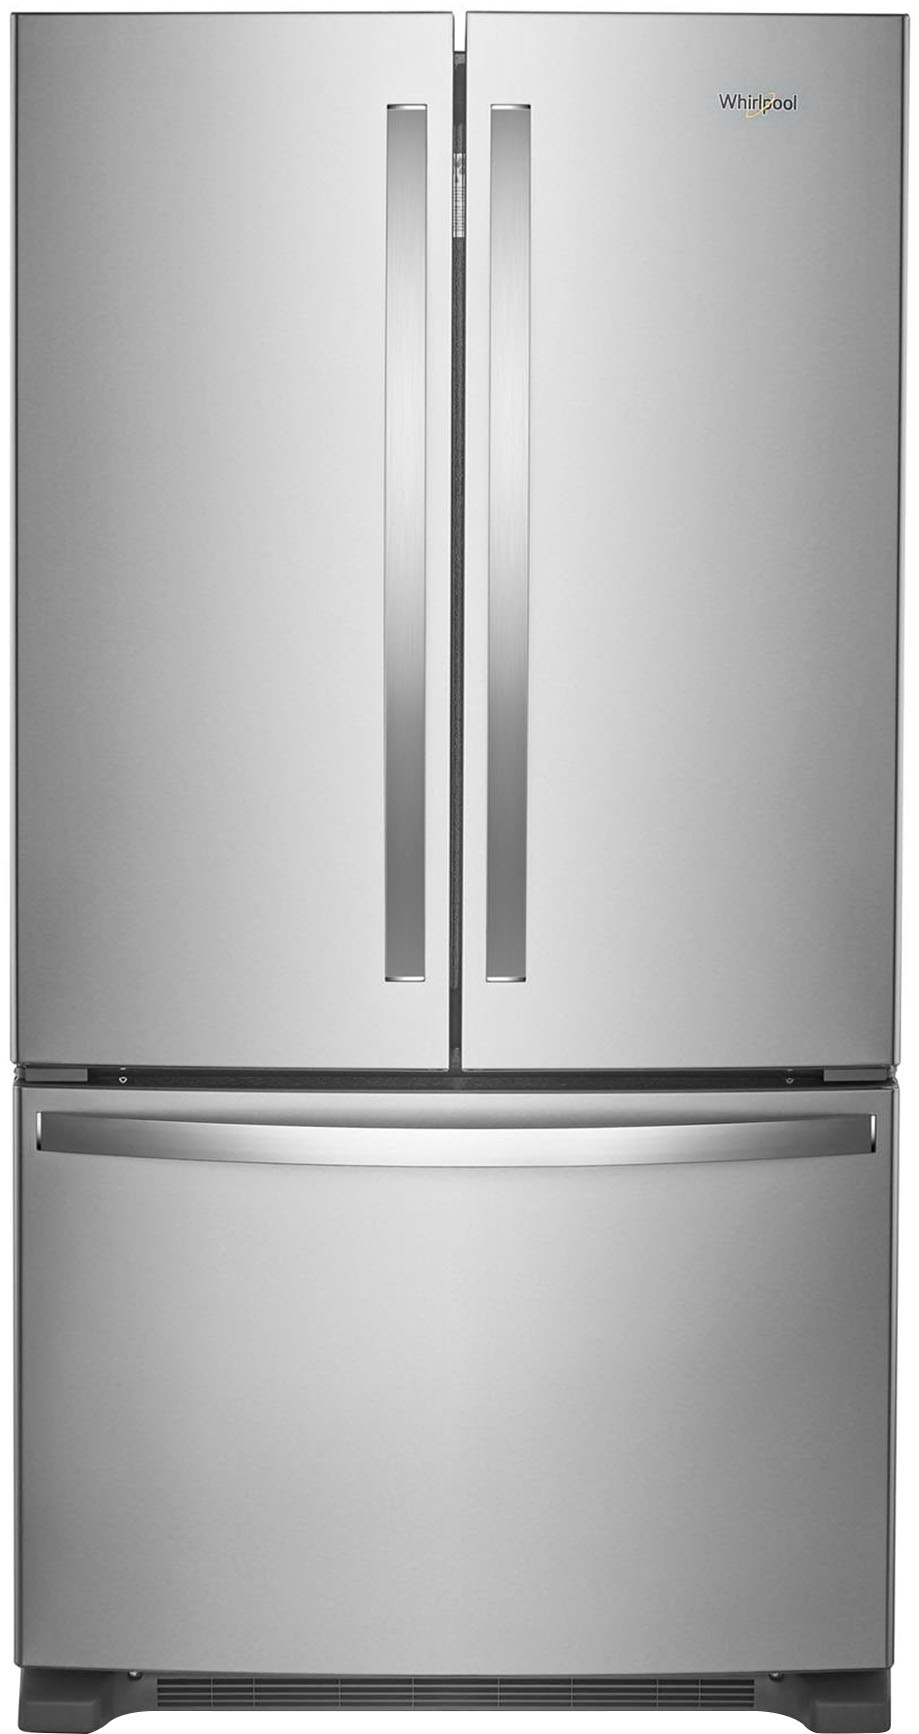 Whirlpool 25 2 Cu Ft French Door Refrigerator With Internal Water Dispenser Stainless Steel Wrf535swhz Best Buy